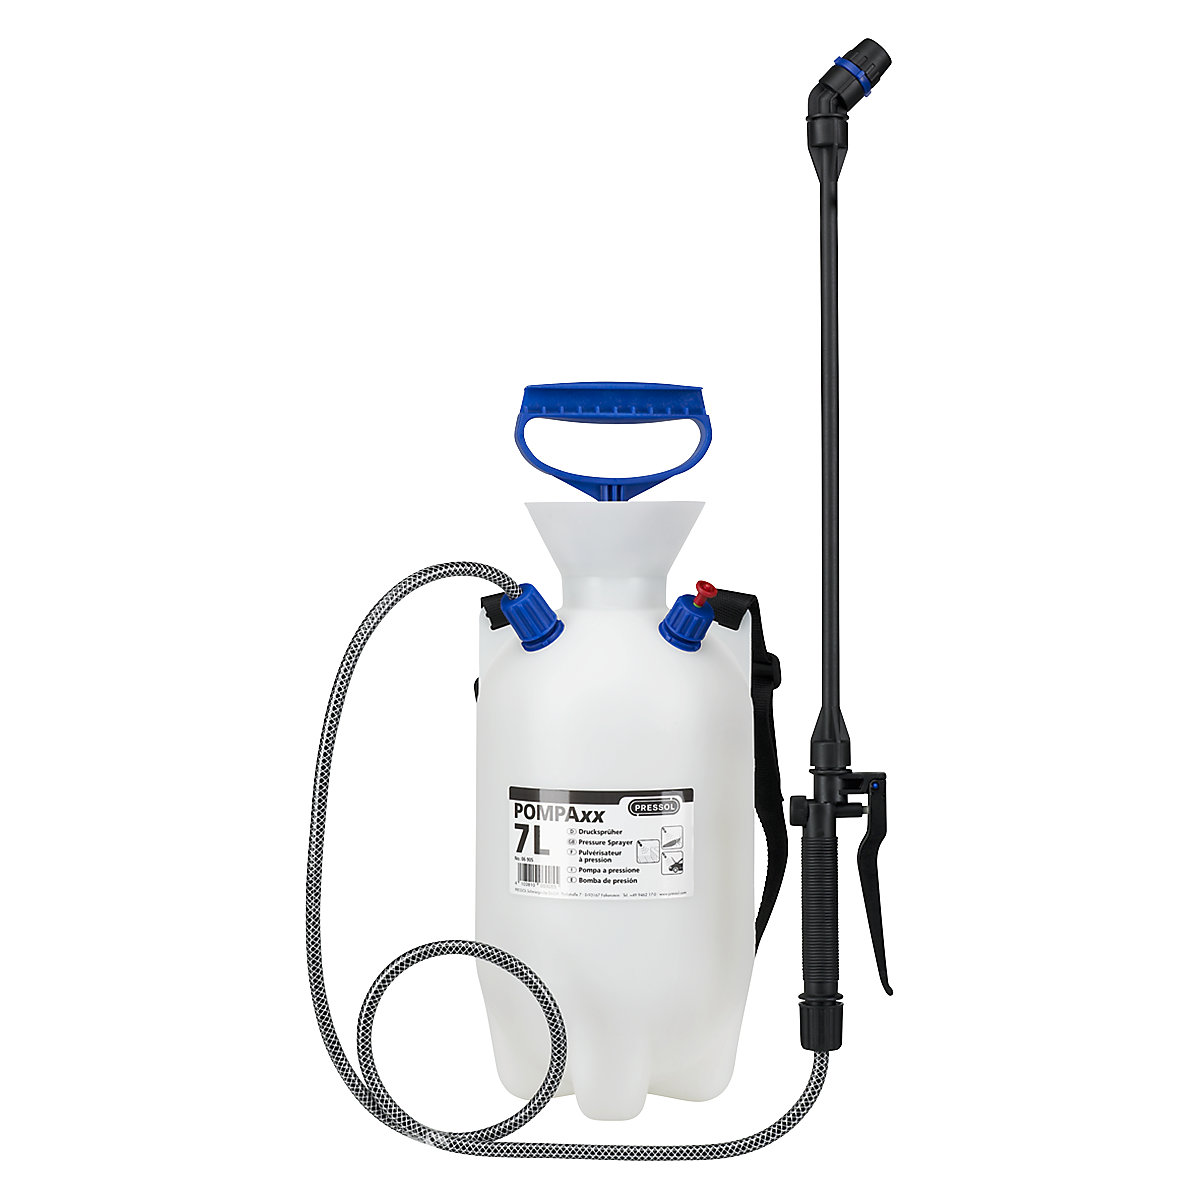 Industrial pressure sprayer – PRESSOL